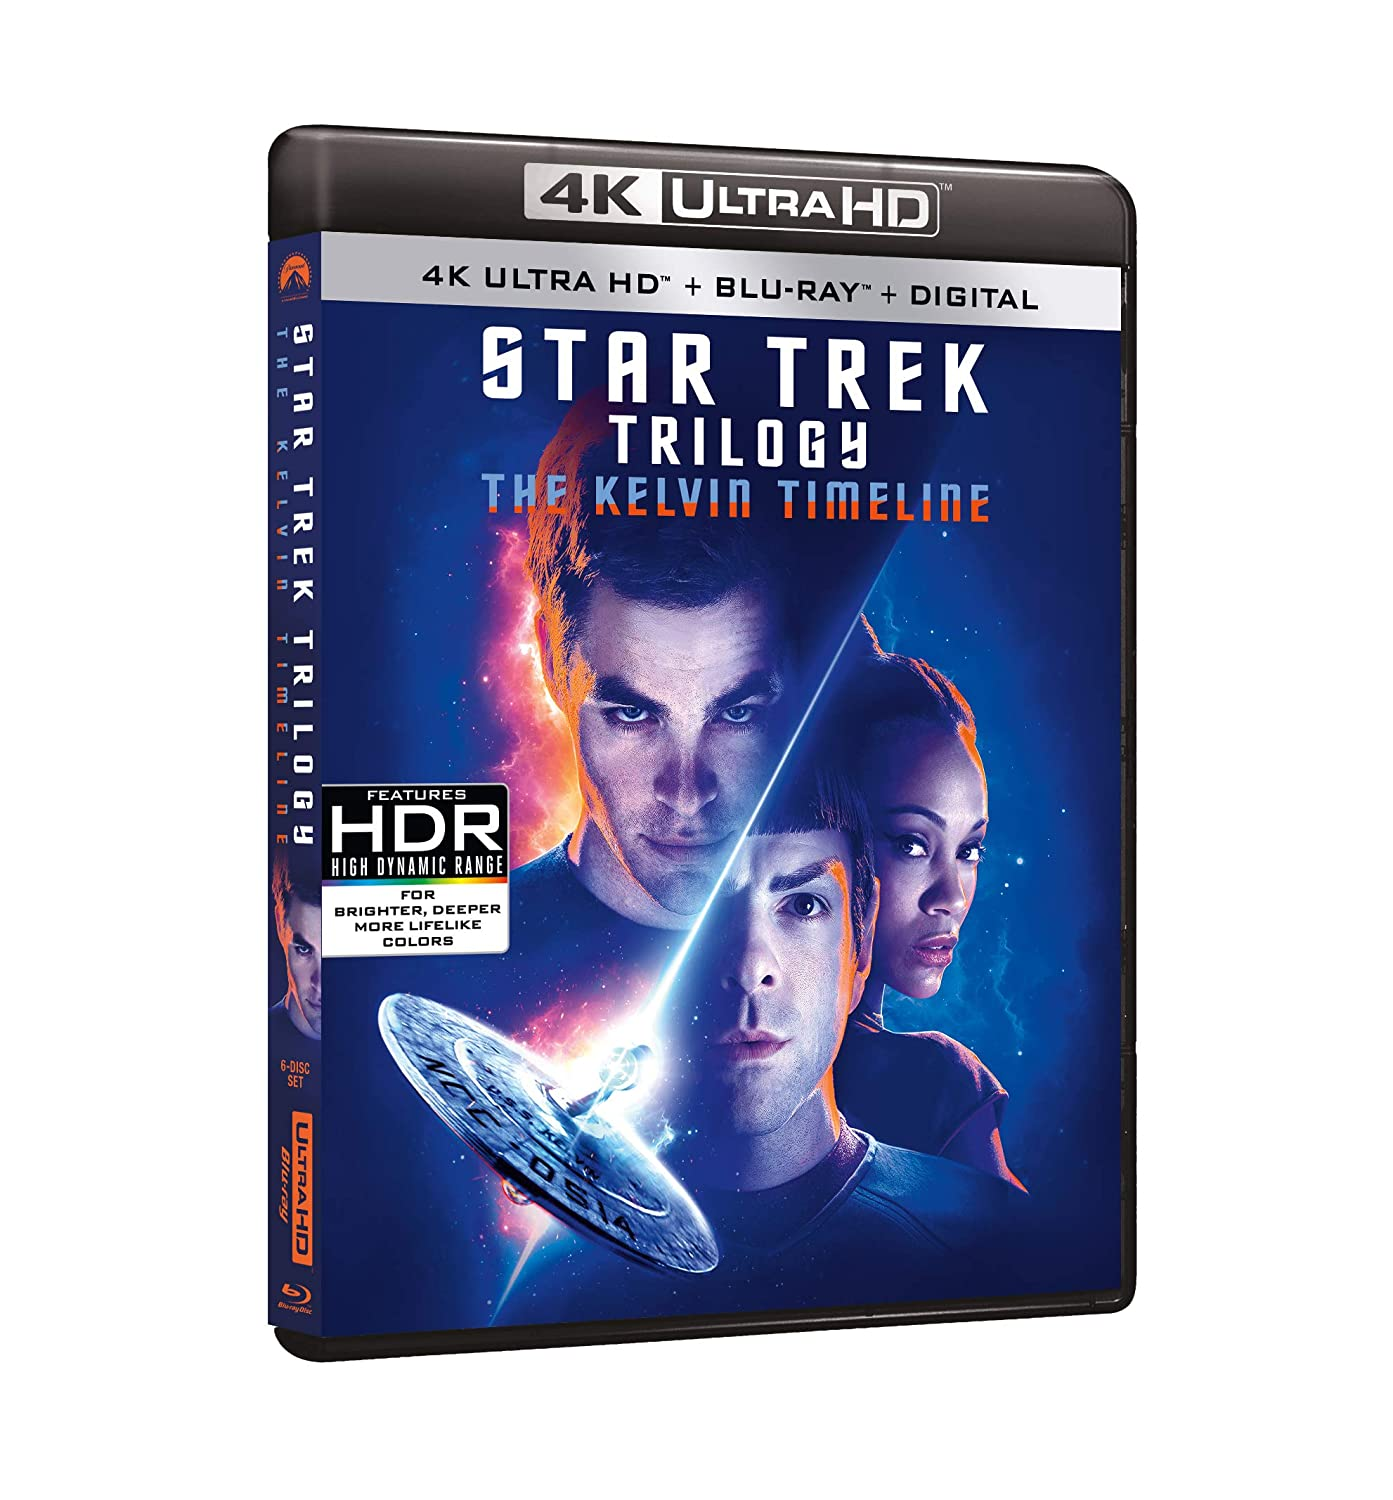 Amazon.com: Star Trek Trilogy: The Kelvin Timeline (4k UHD + Blu-ray + Digital) $31